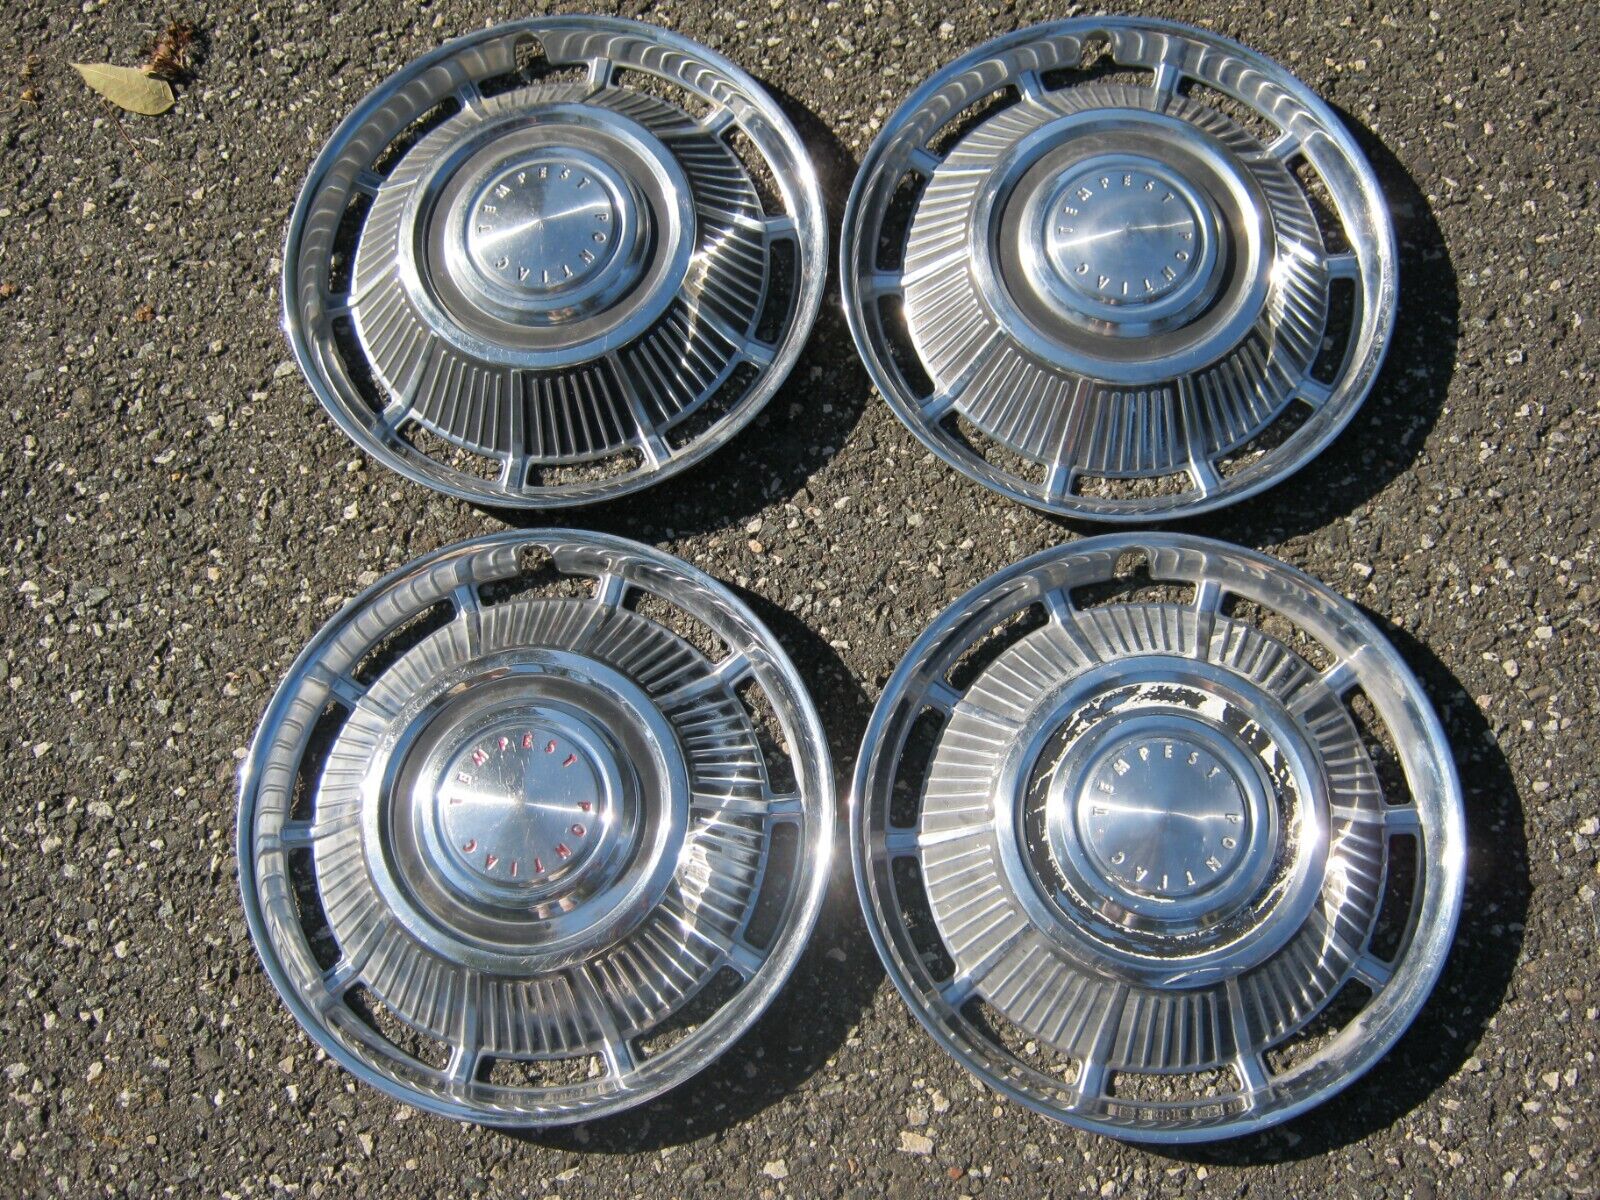 Factory original 1961 to 1963 Pontiac Tempest 15 inch hubcaps wheel covers